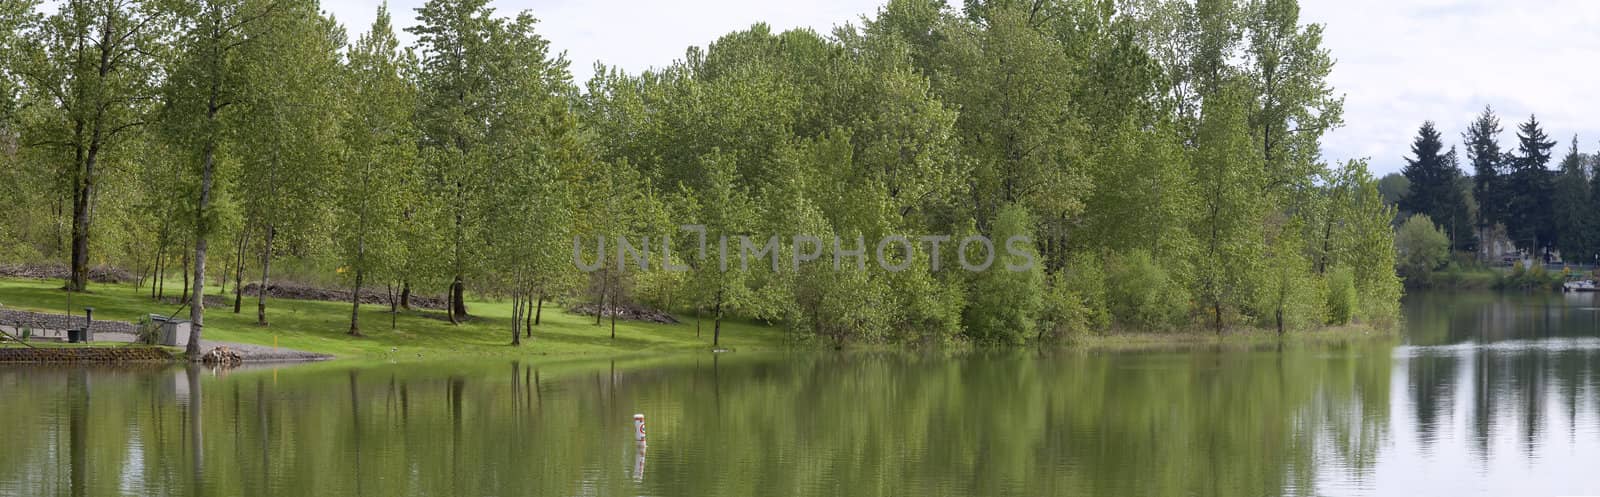 Park panorama and lake, Woodland WA.